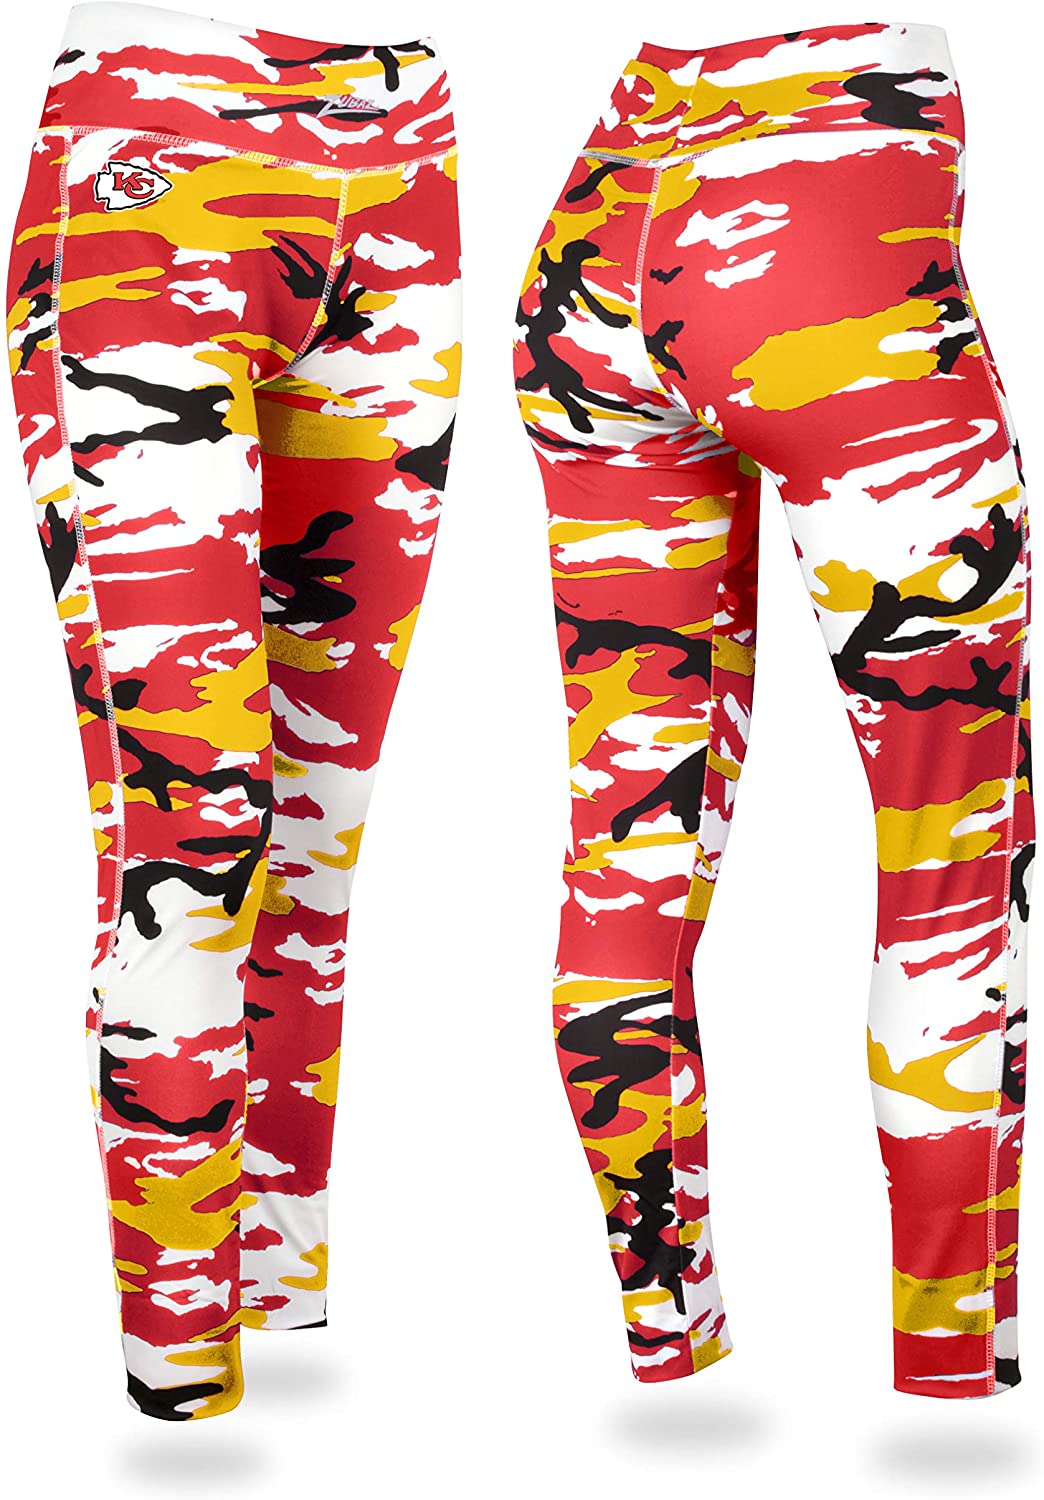 Zubaz Kansas City Chiefs NFL Women's Camo Print Legging, Red/Gold | eBay